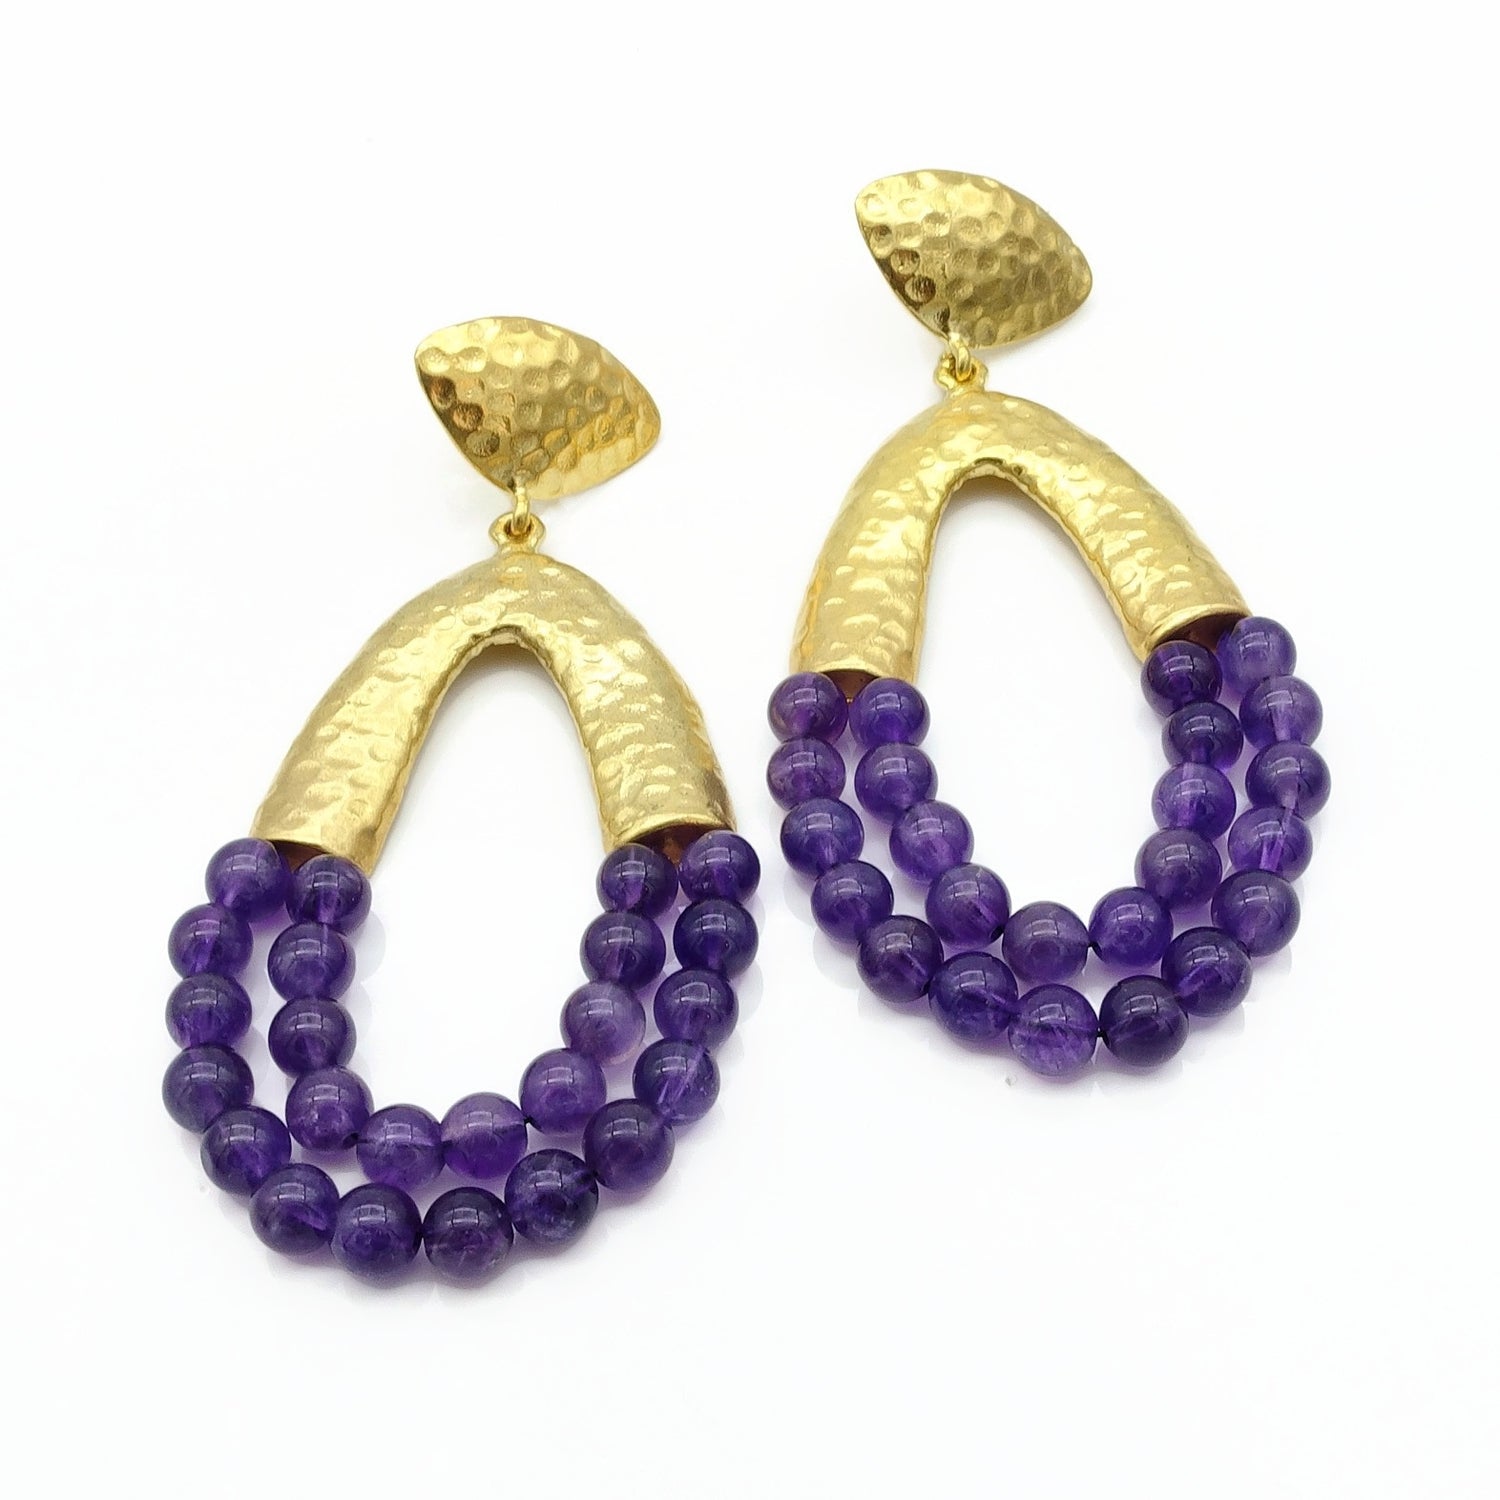 Aylas Jade handmade semi precious gemstone earrings - 21ct Gold plated Ottoman style